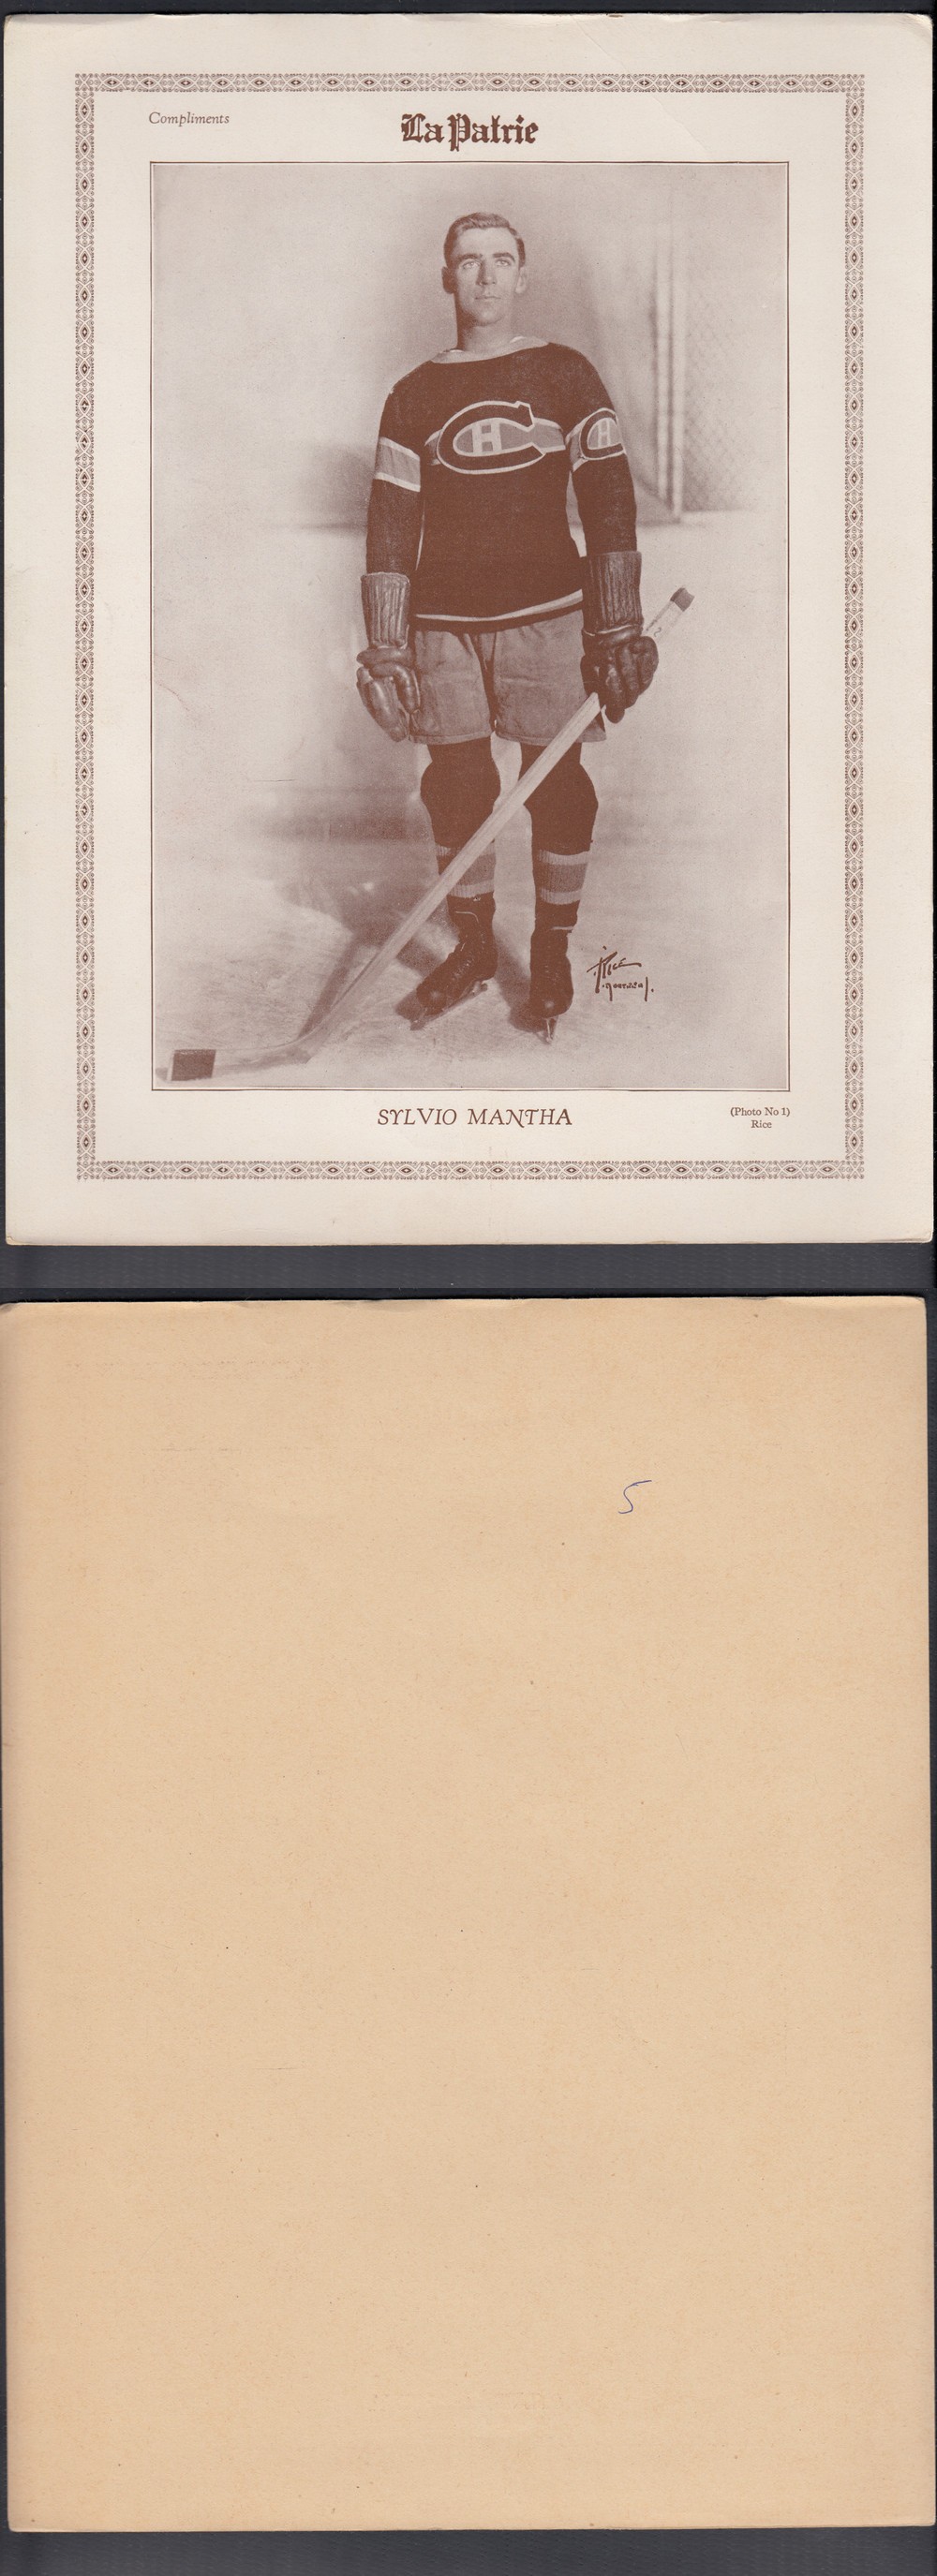 1927-28 LA PATRIE PHOTO #1 S. MANTHA photo